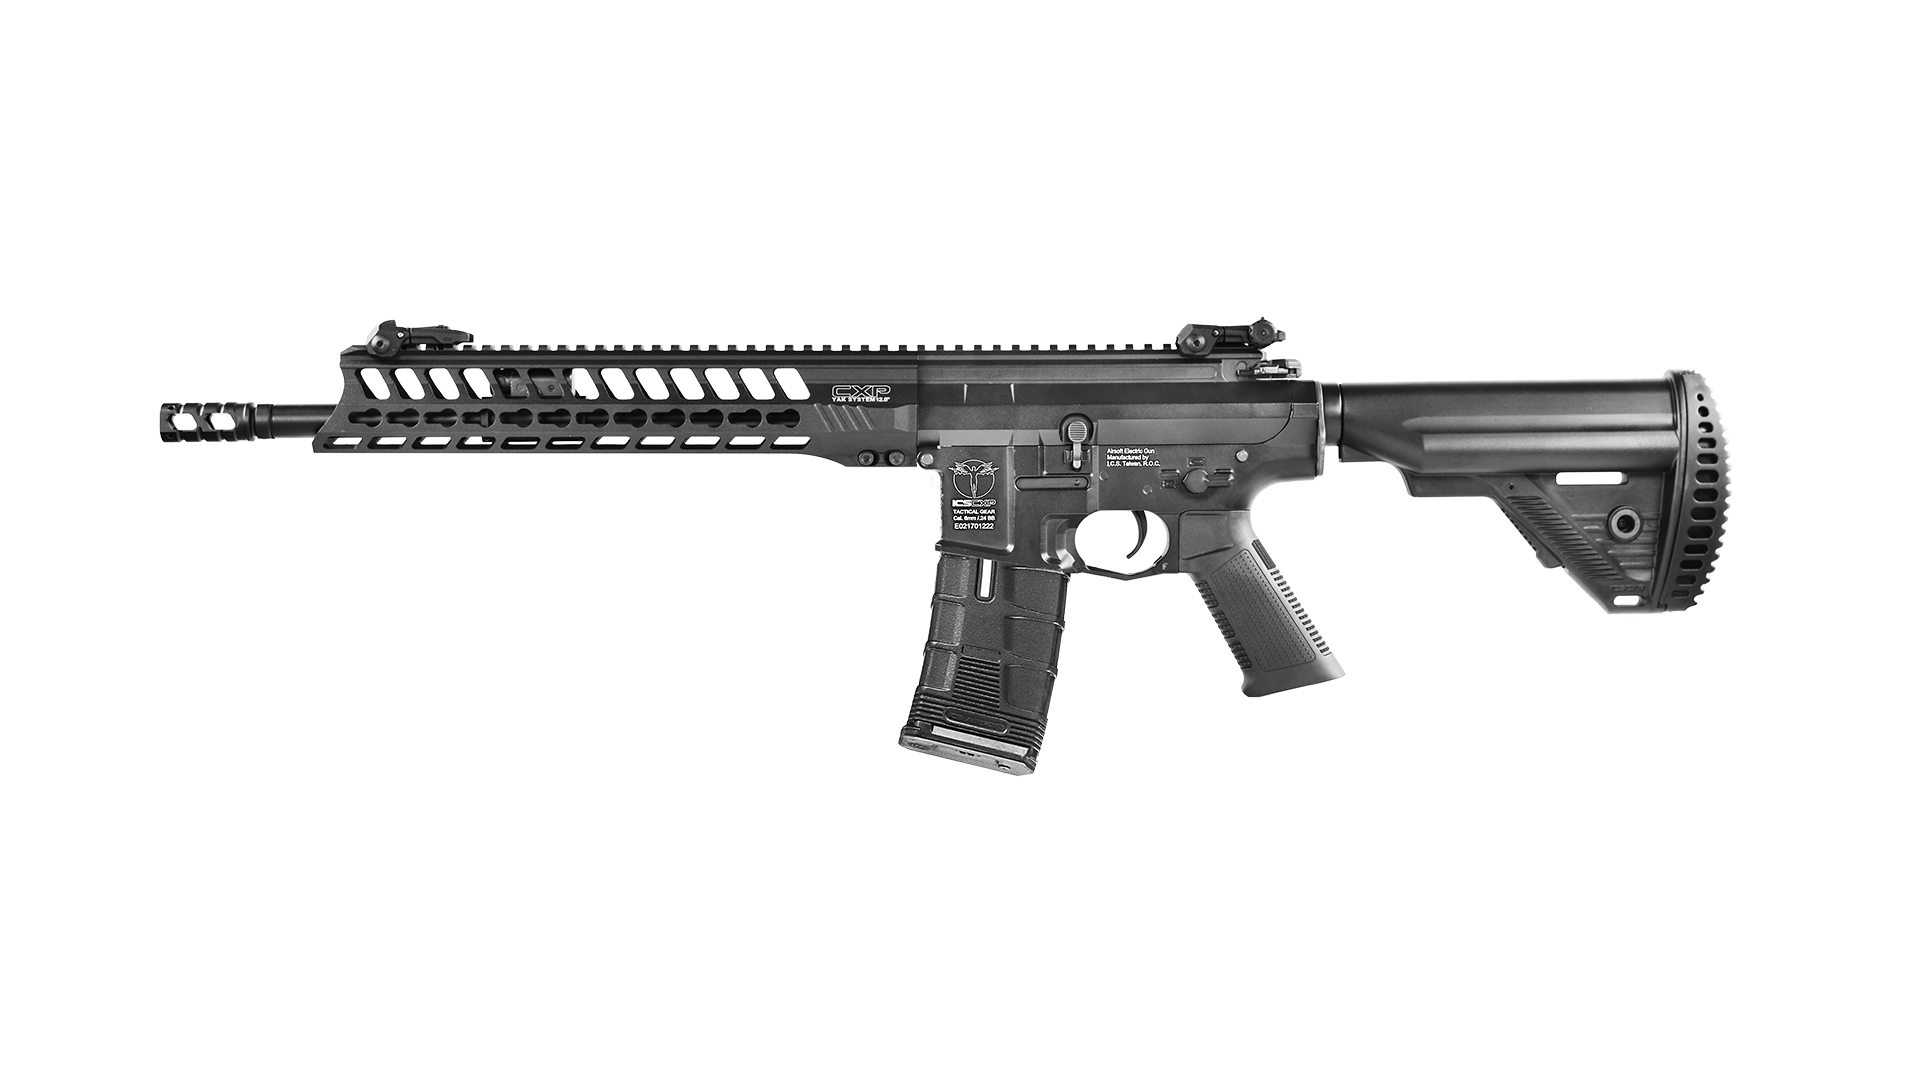 CXP-YAK Carbine S1 Stock